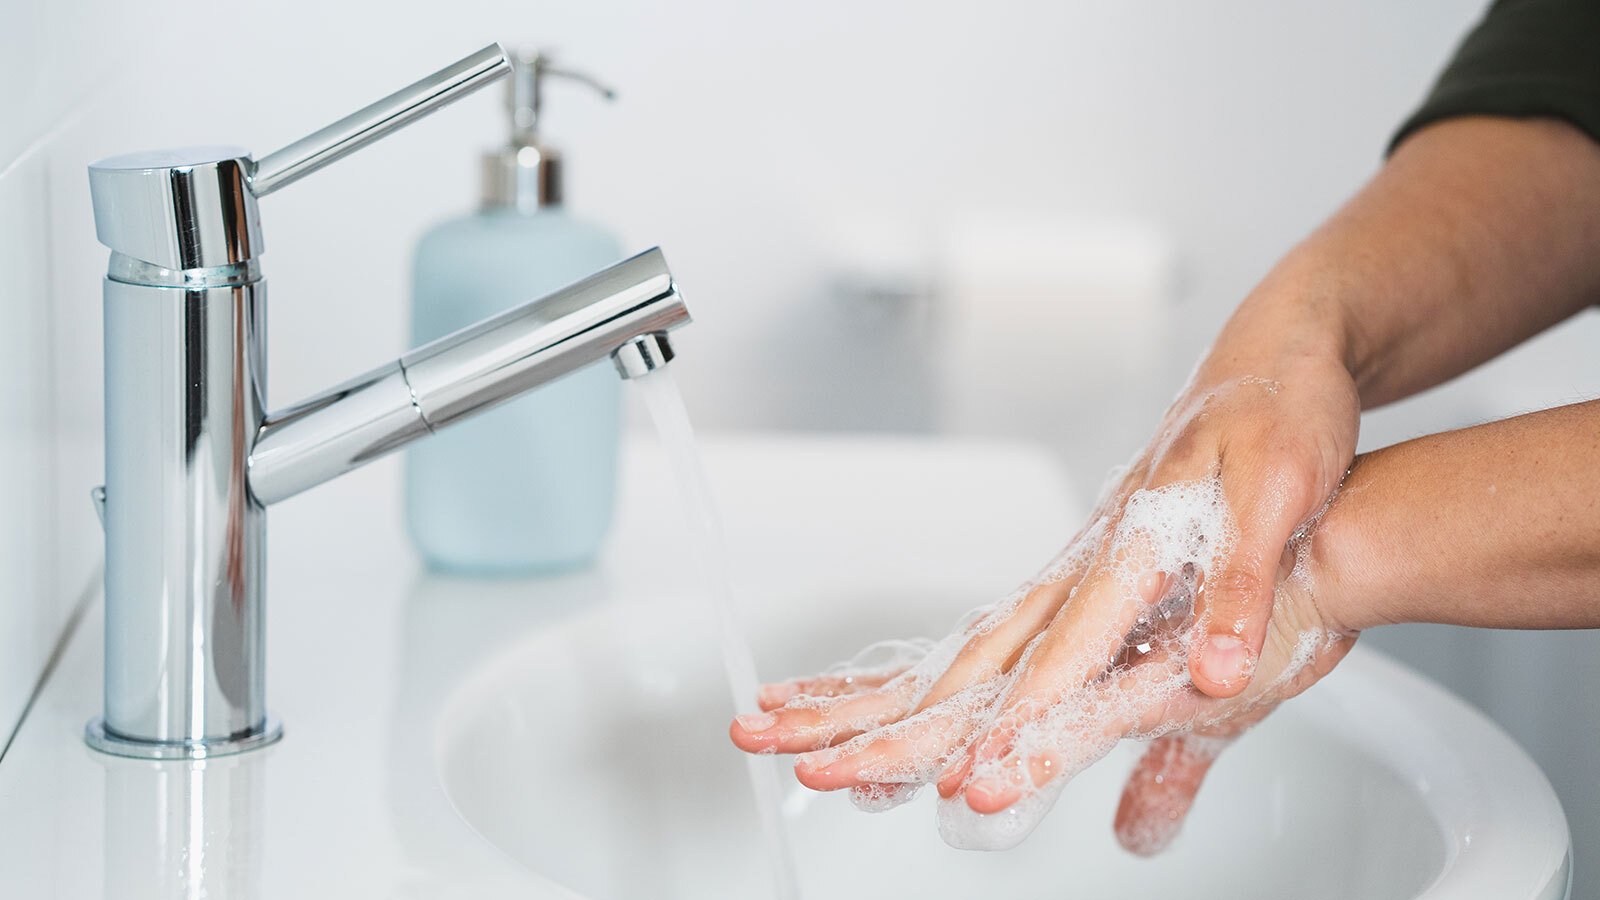  12 Step Hand Washing Guide